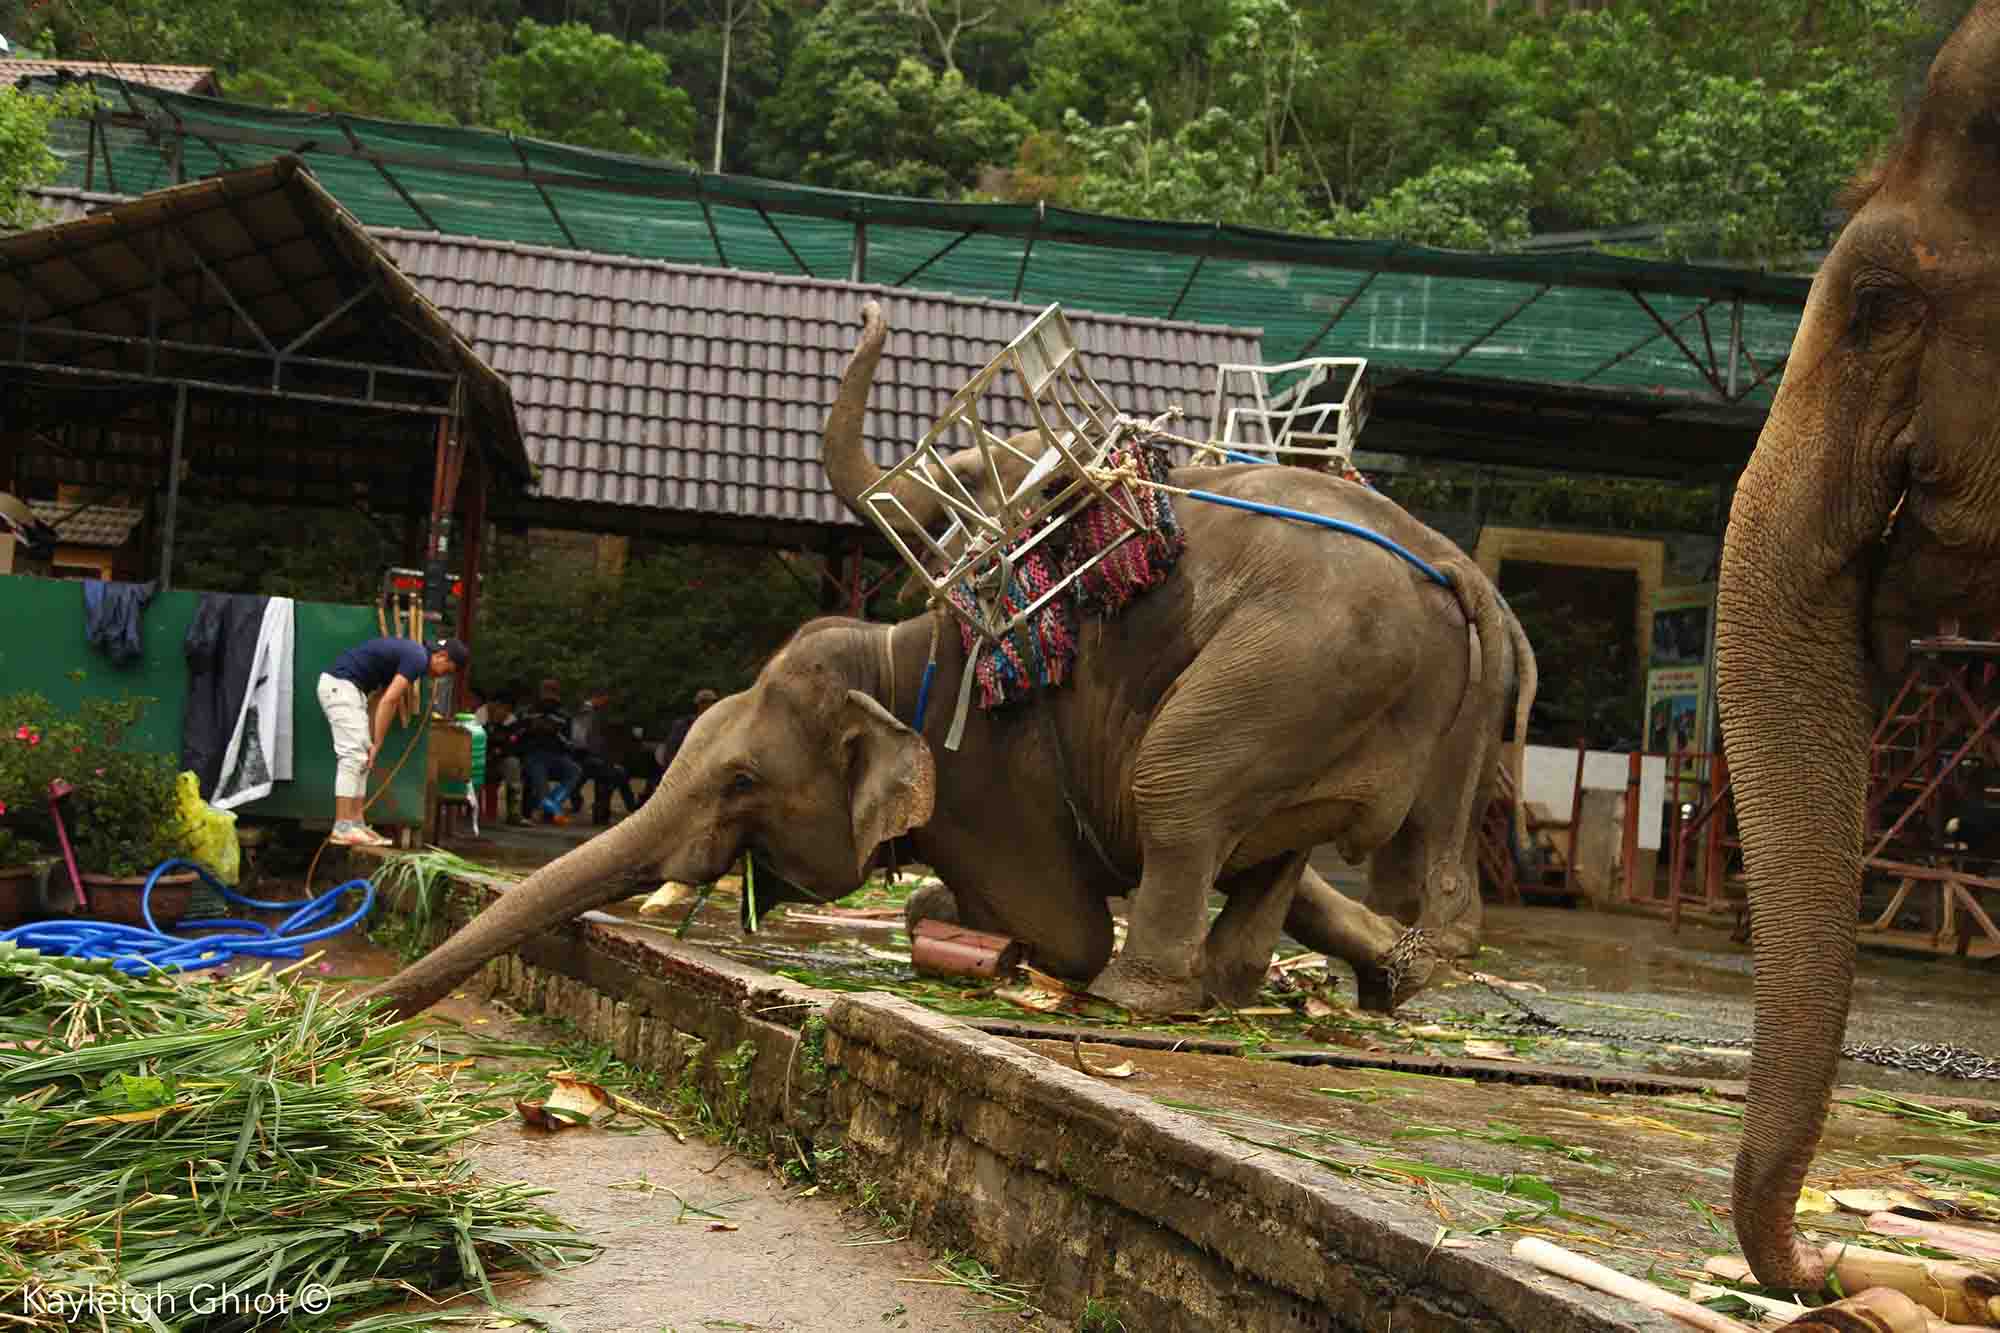 Elephant riding in Vietnam